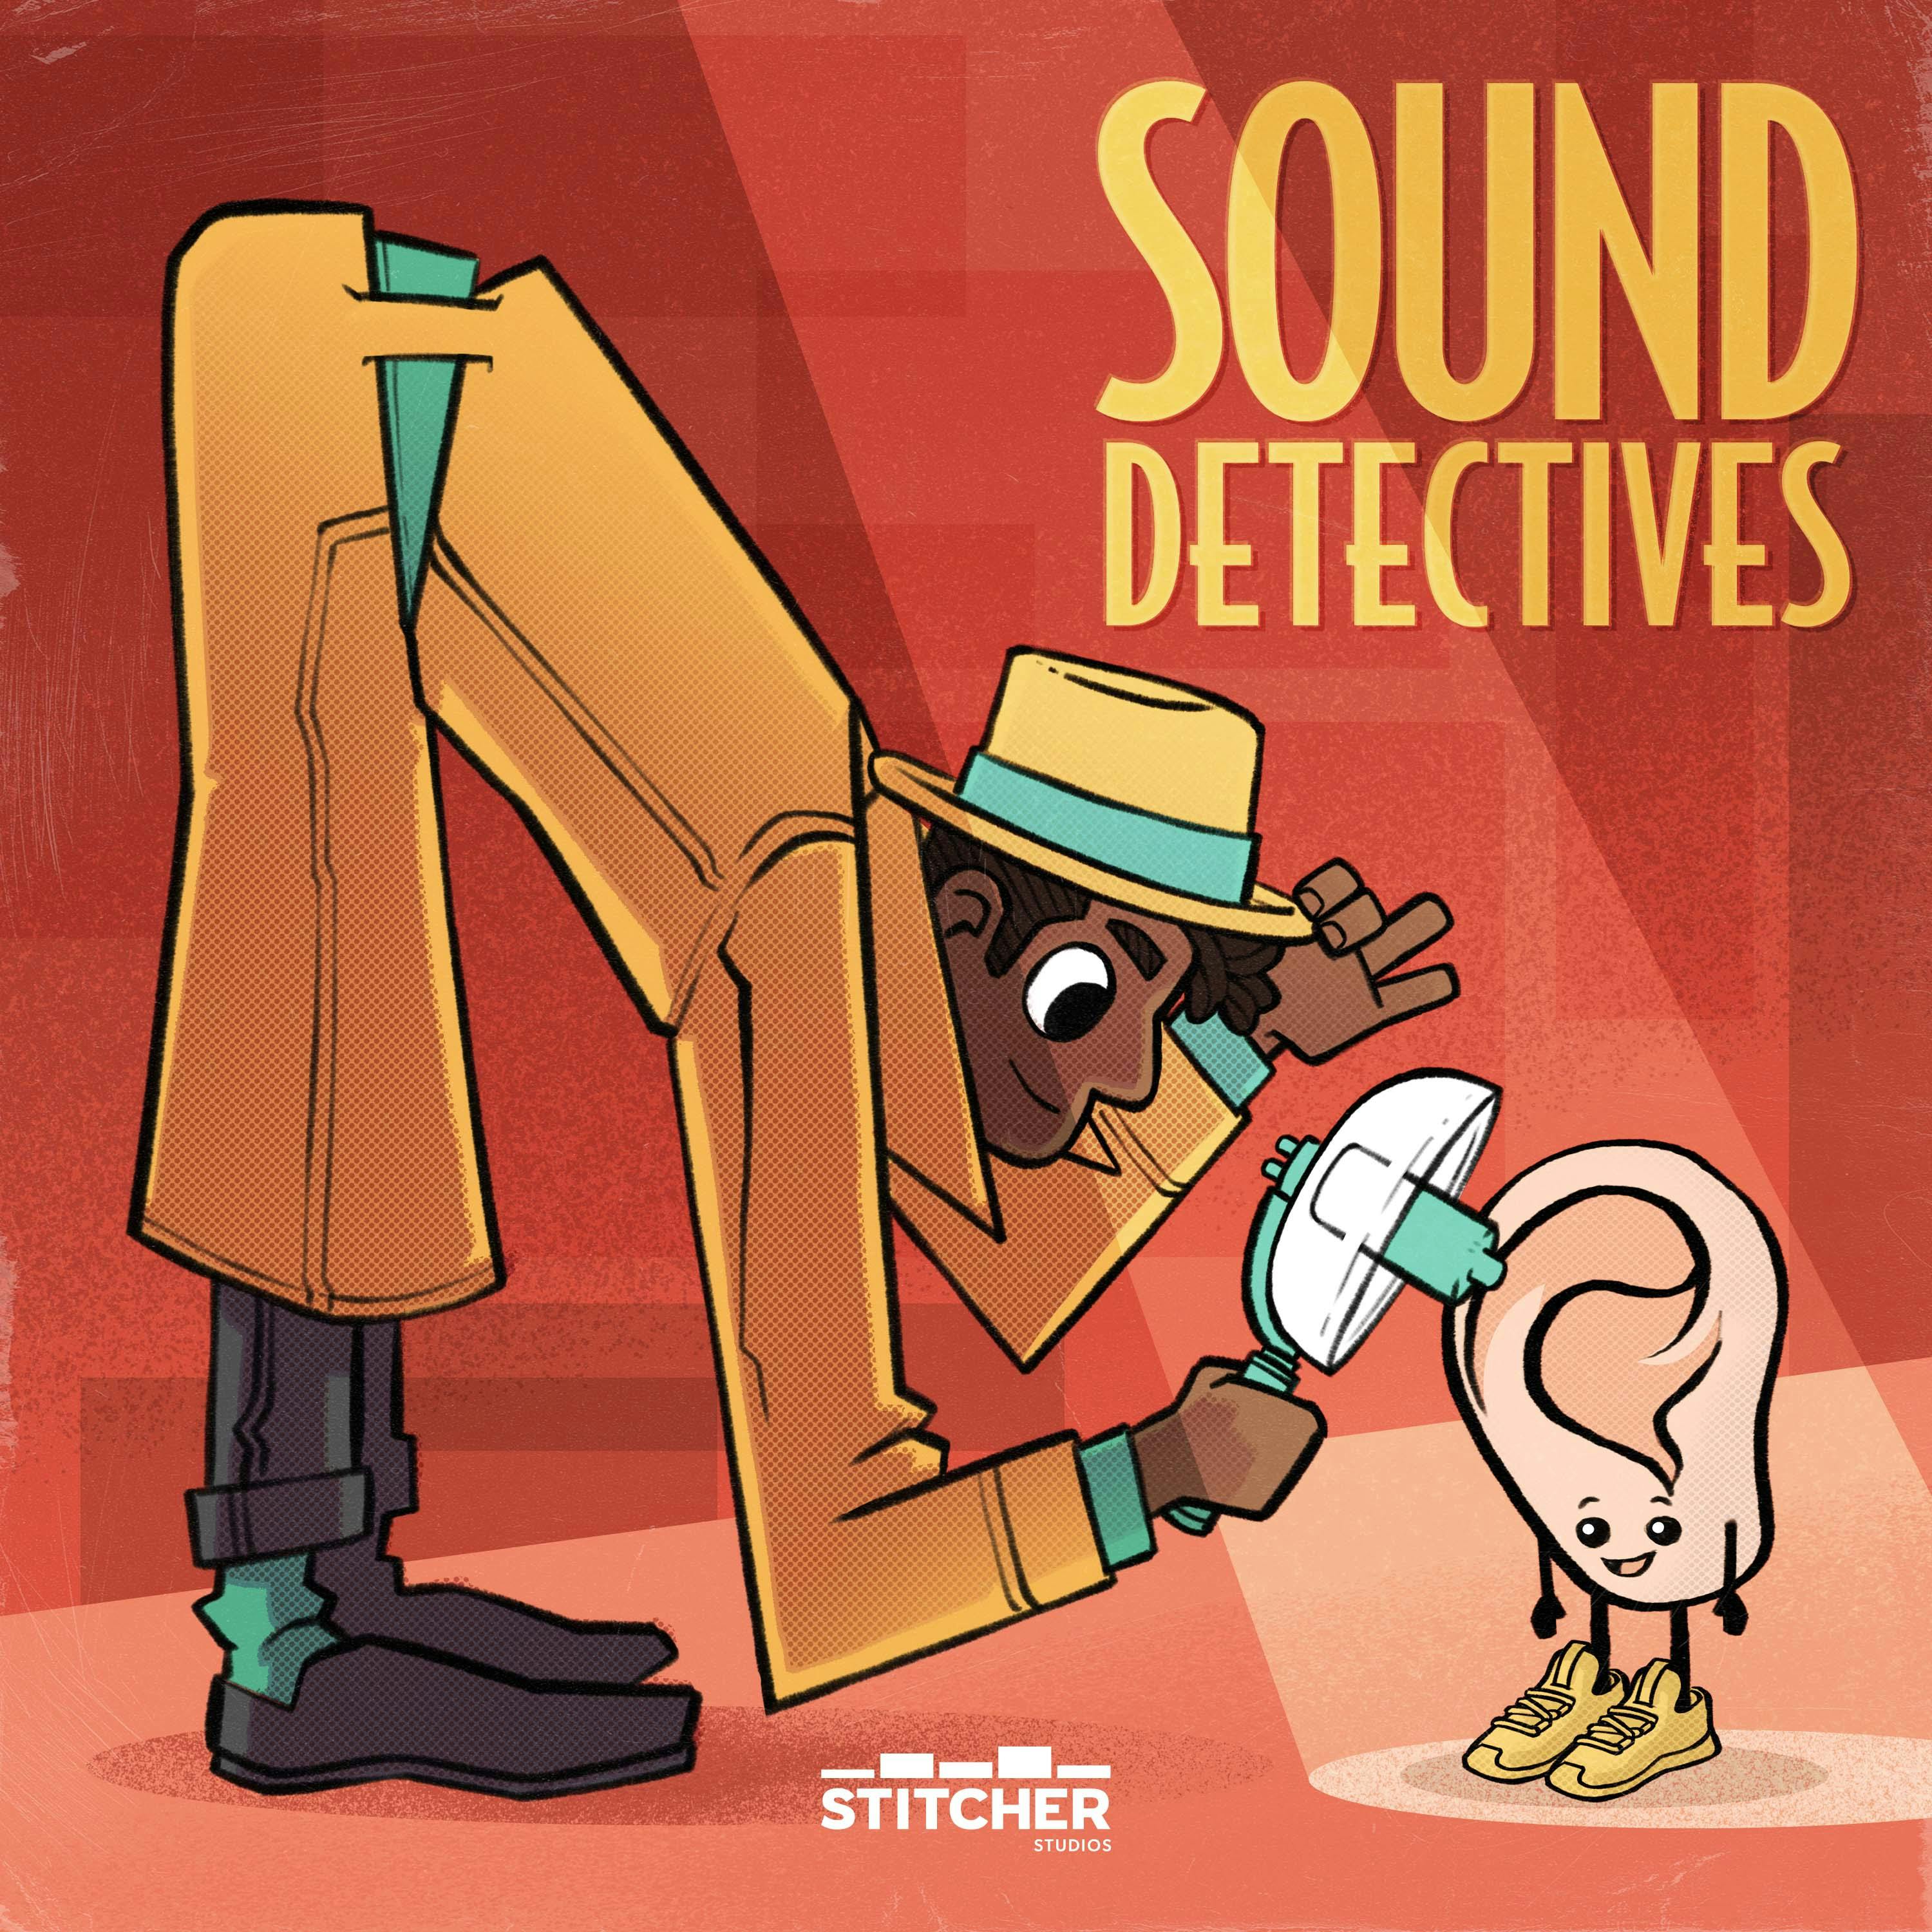 Introducing Sound Detectives from LeVar Burton